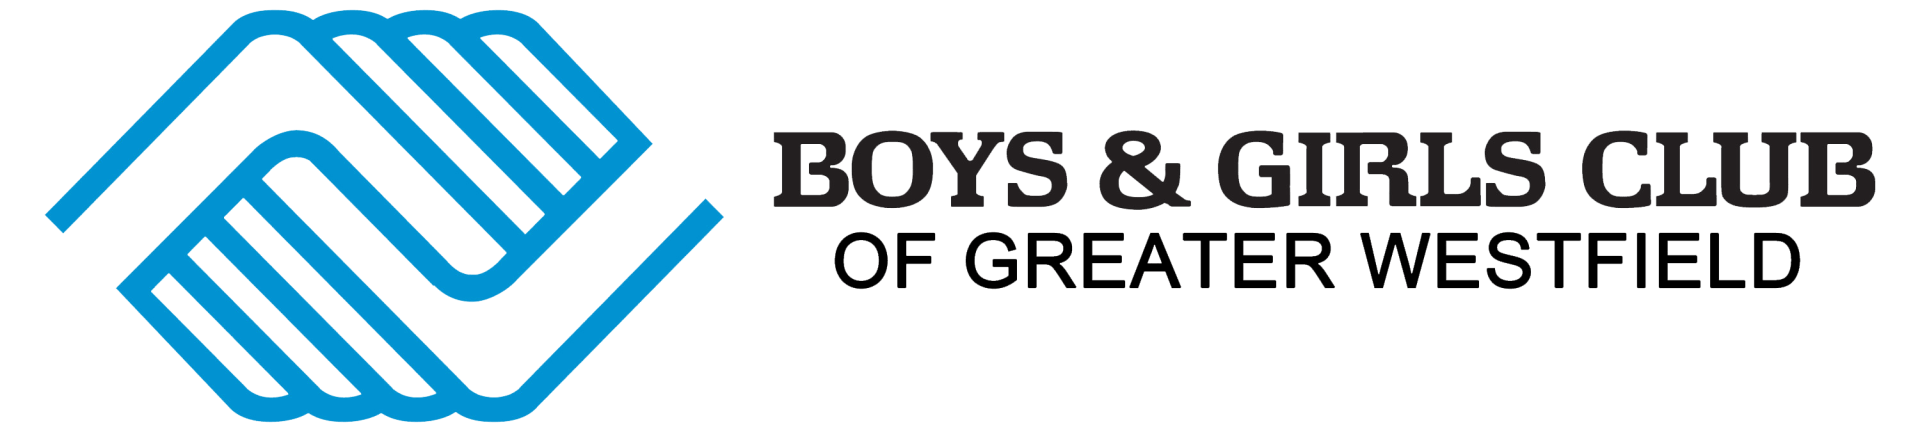 Boys & Girls Club of Greater Westfield